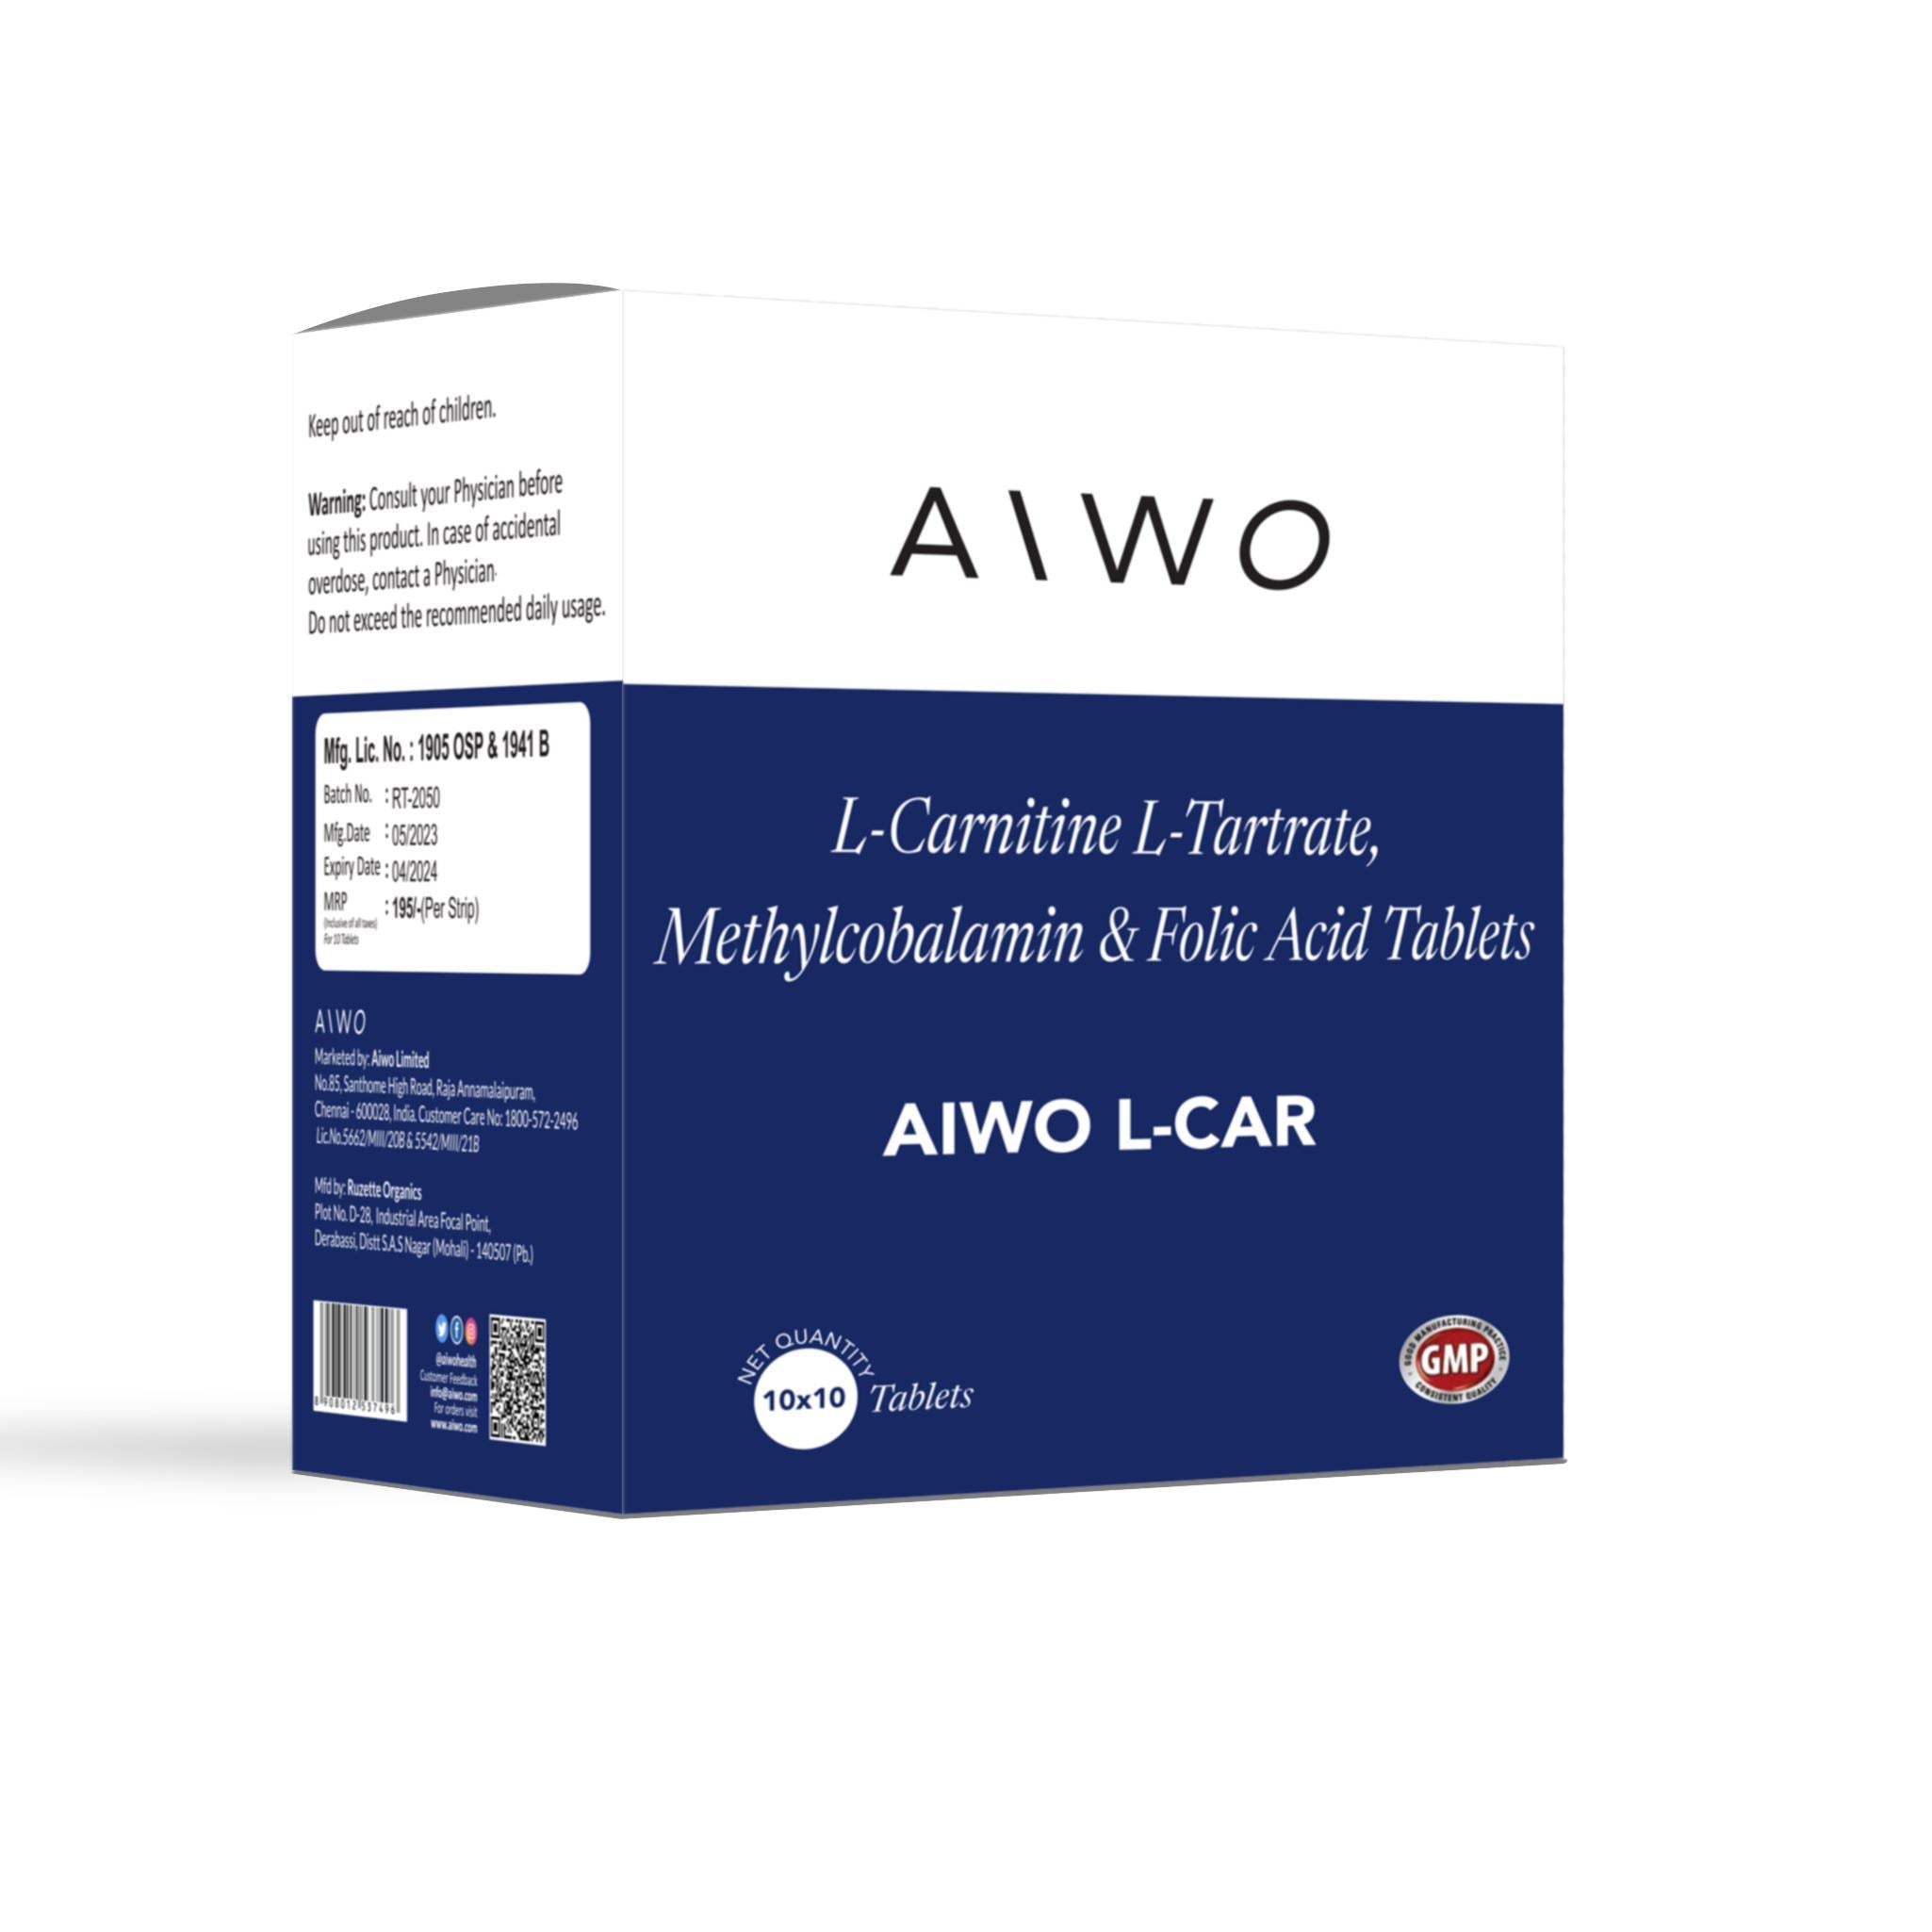 MyDiagnostics Aiwo L- CAR